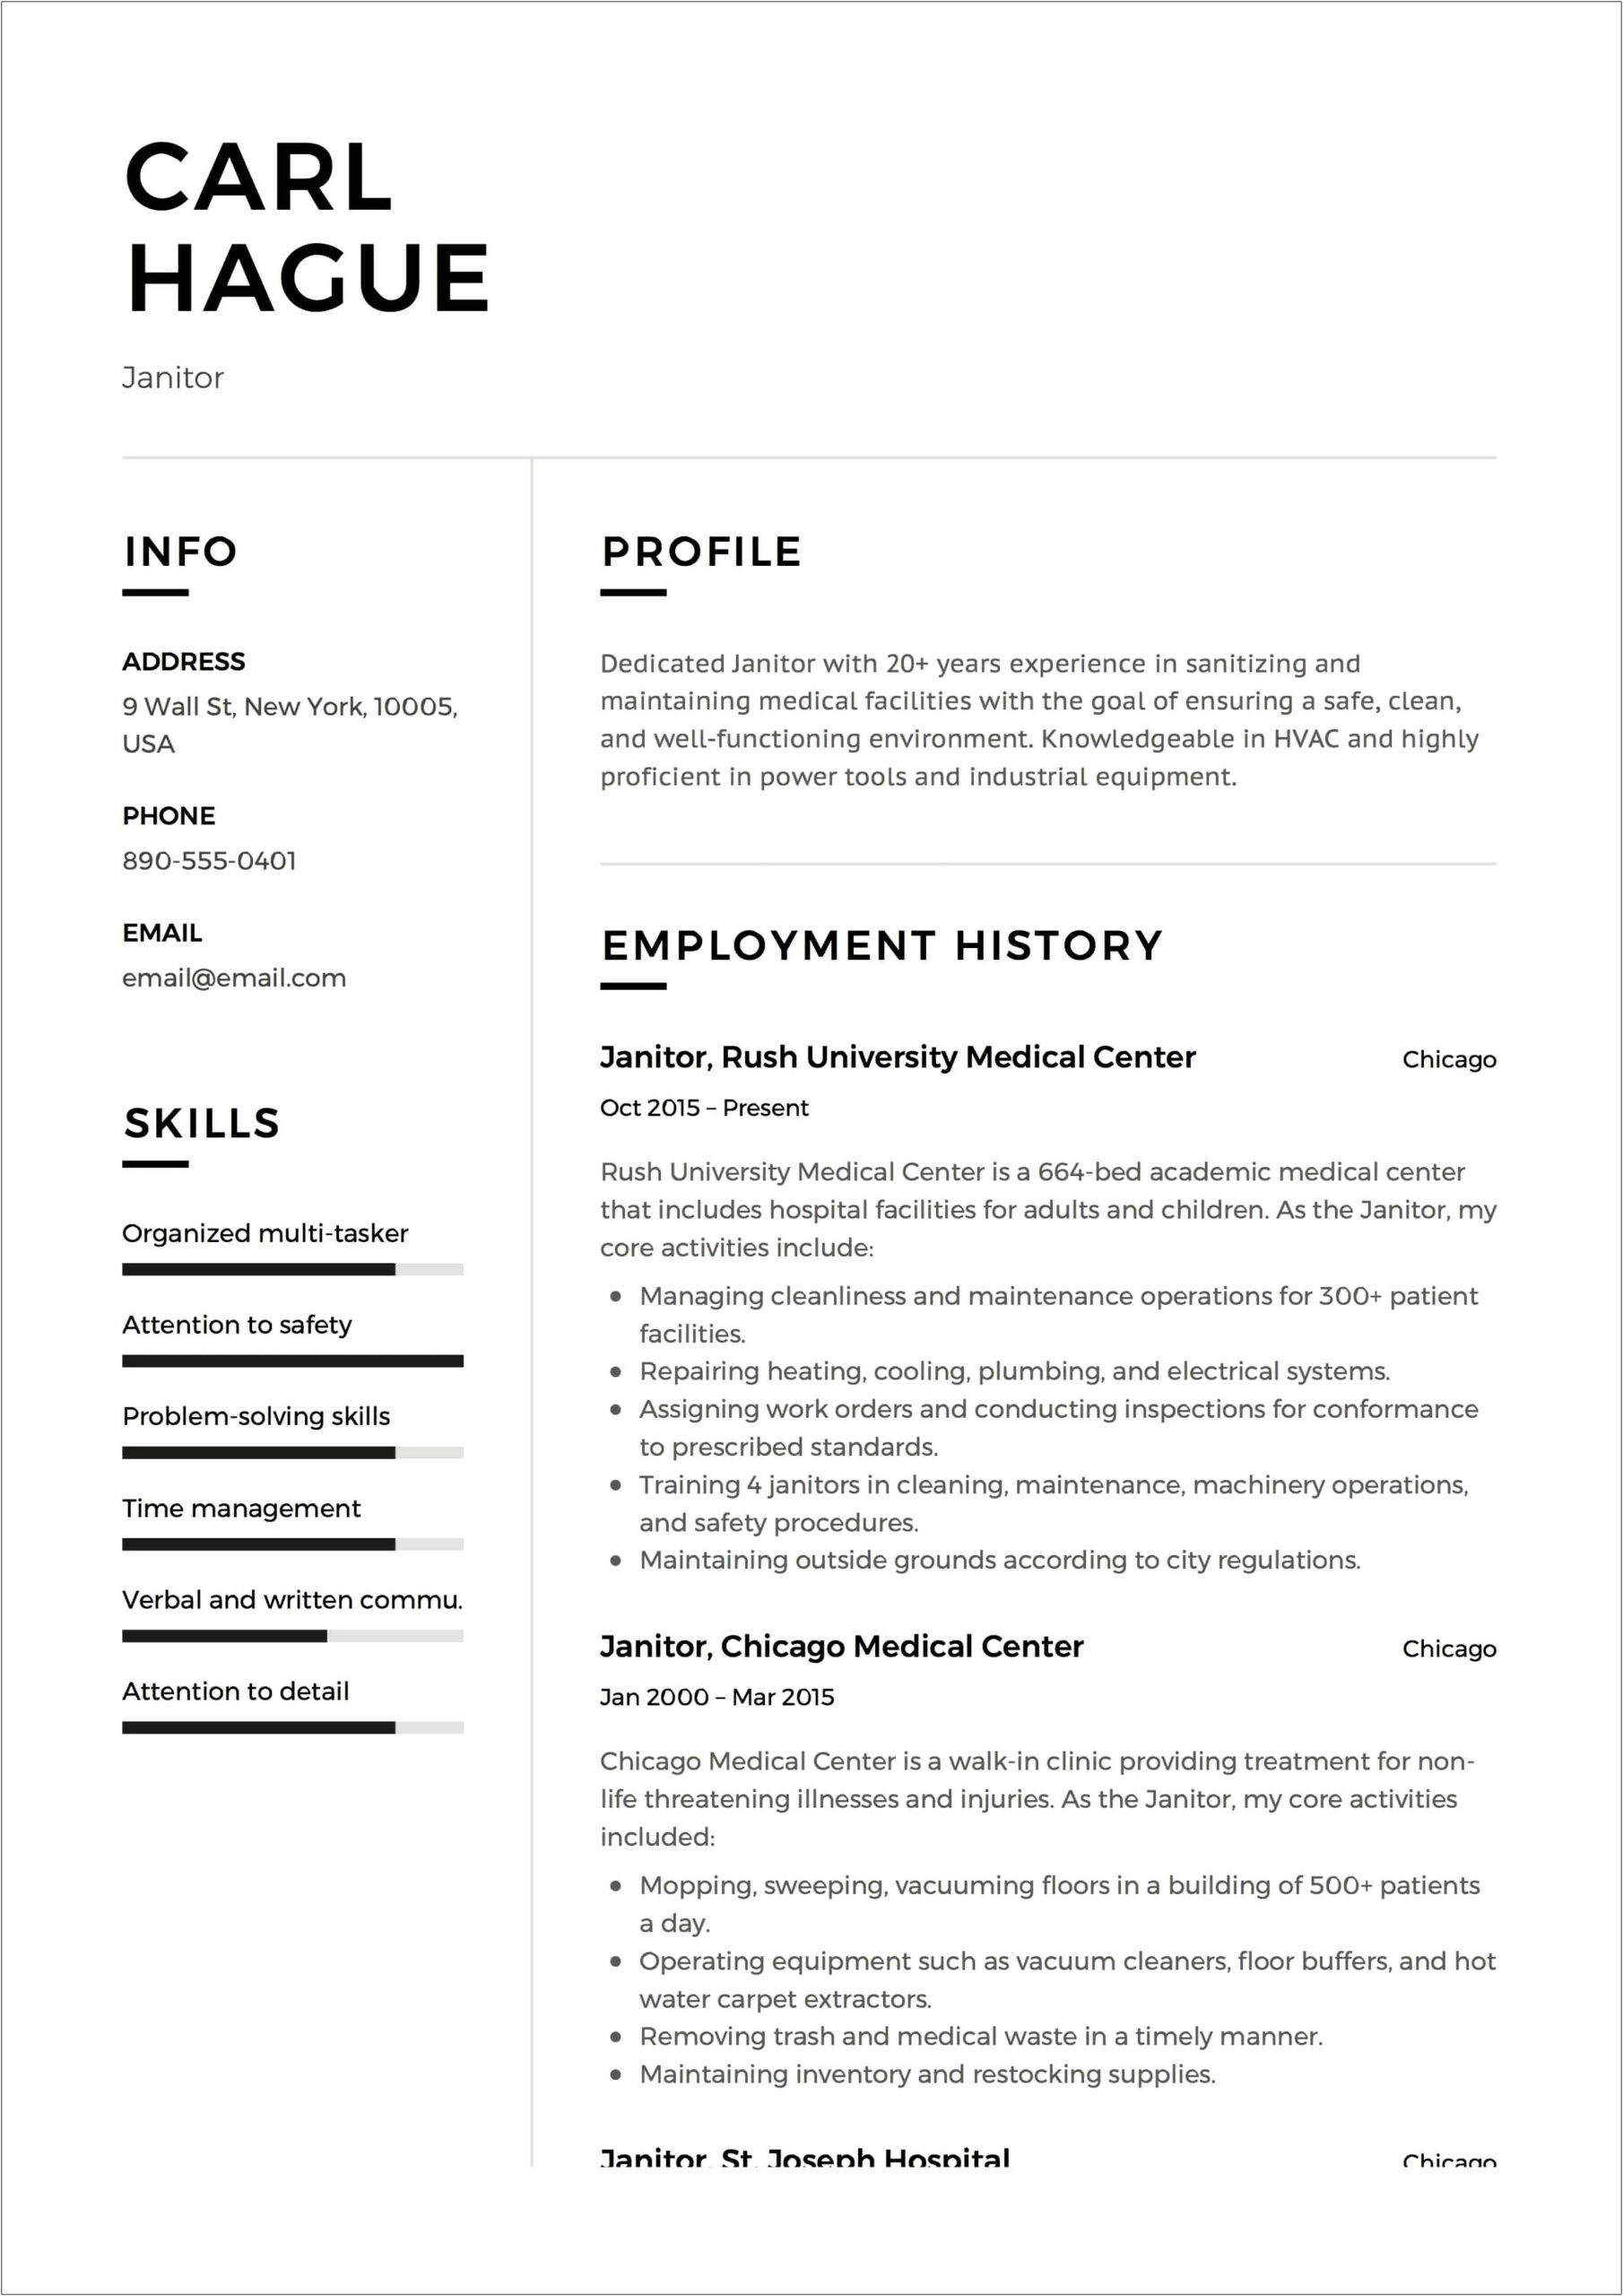 Resume Employment History Job Description